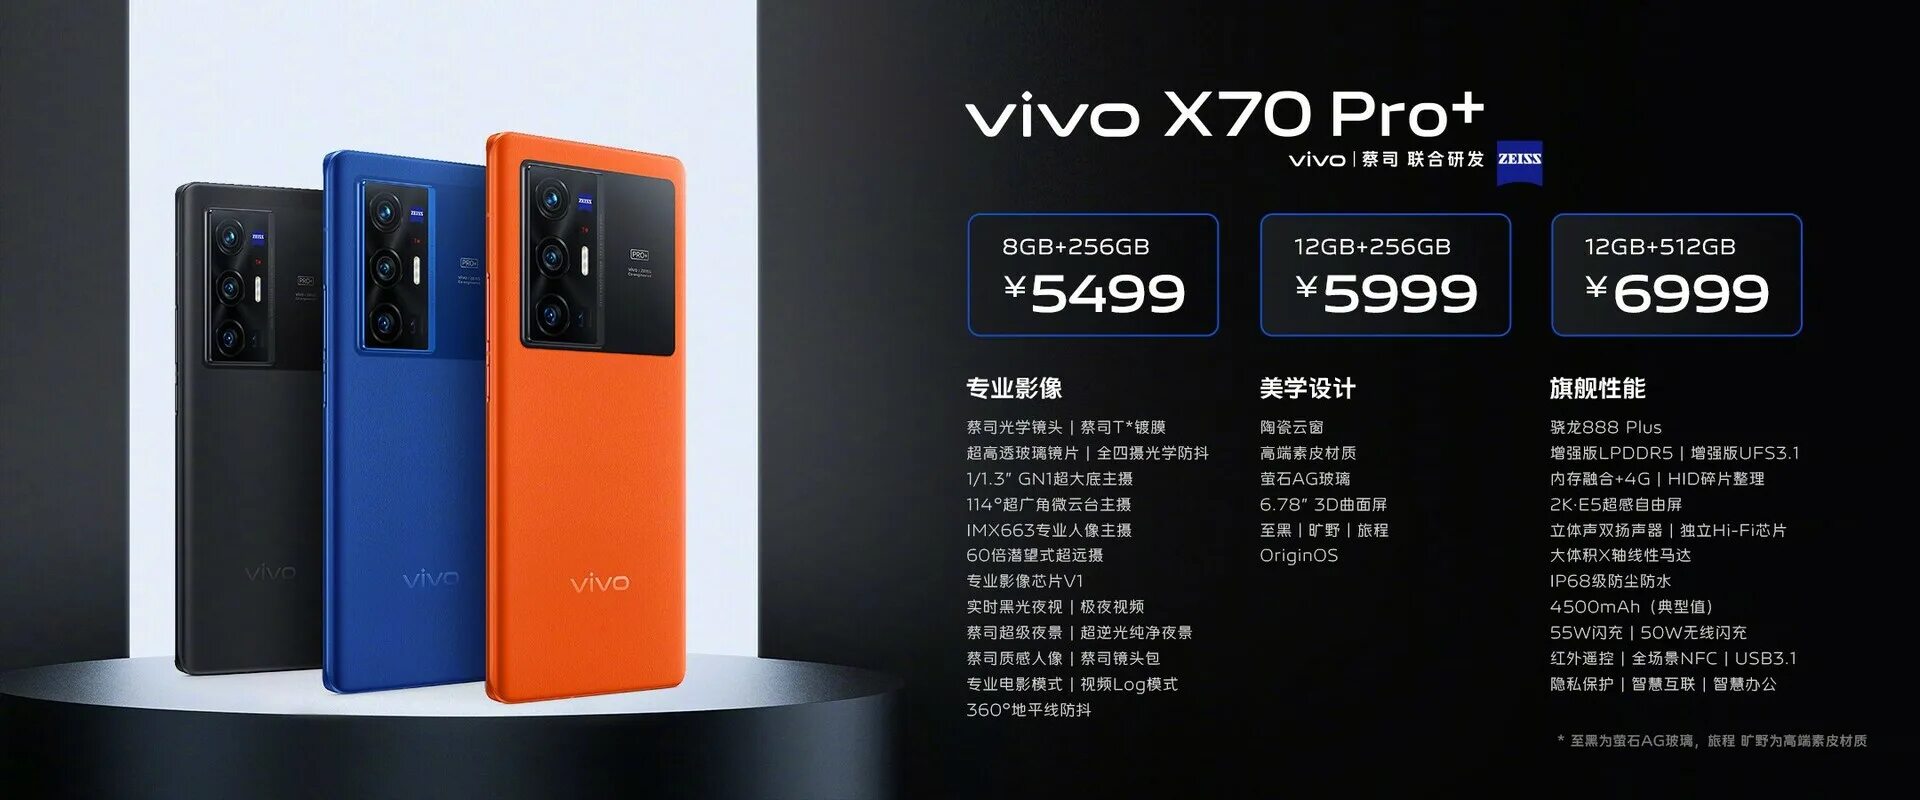 X70pro+. X70 Pro Plus. Vivo x70 Pro Plus характеристики. X70 Pro. Vivo x100 дата выхода